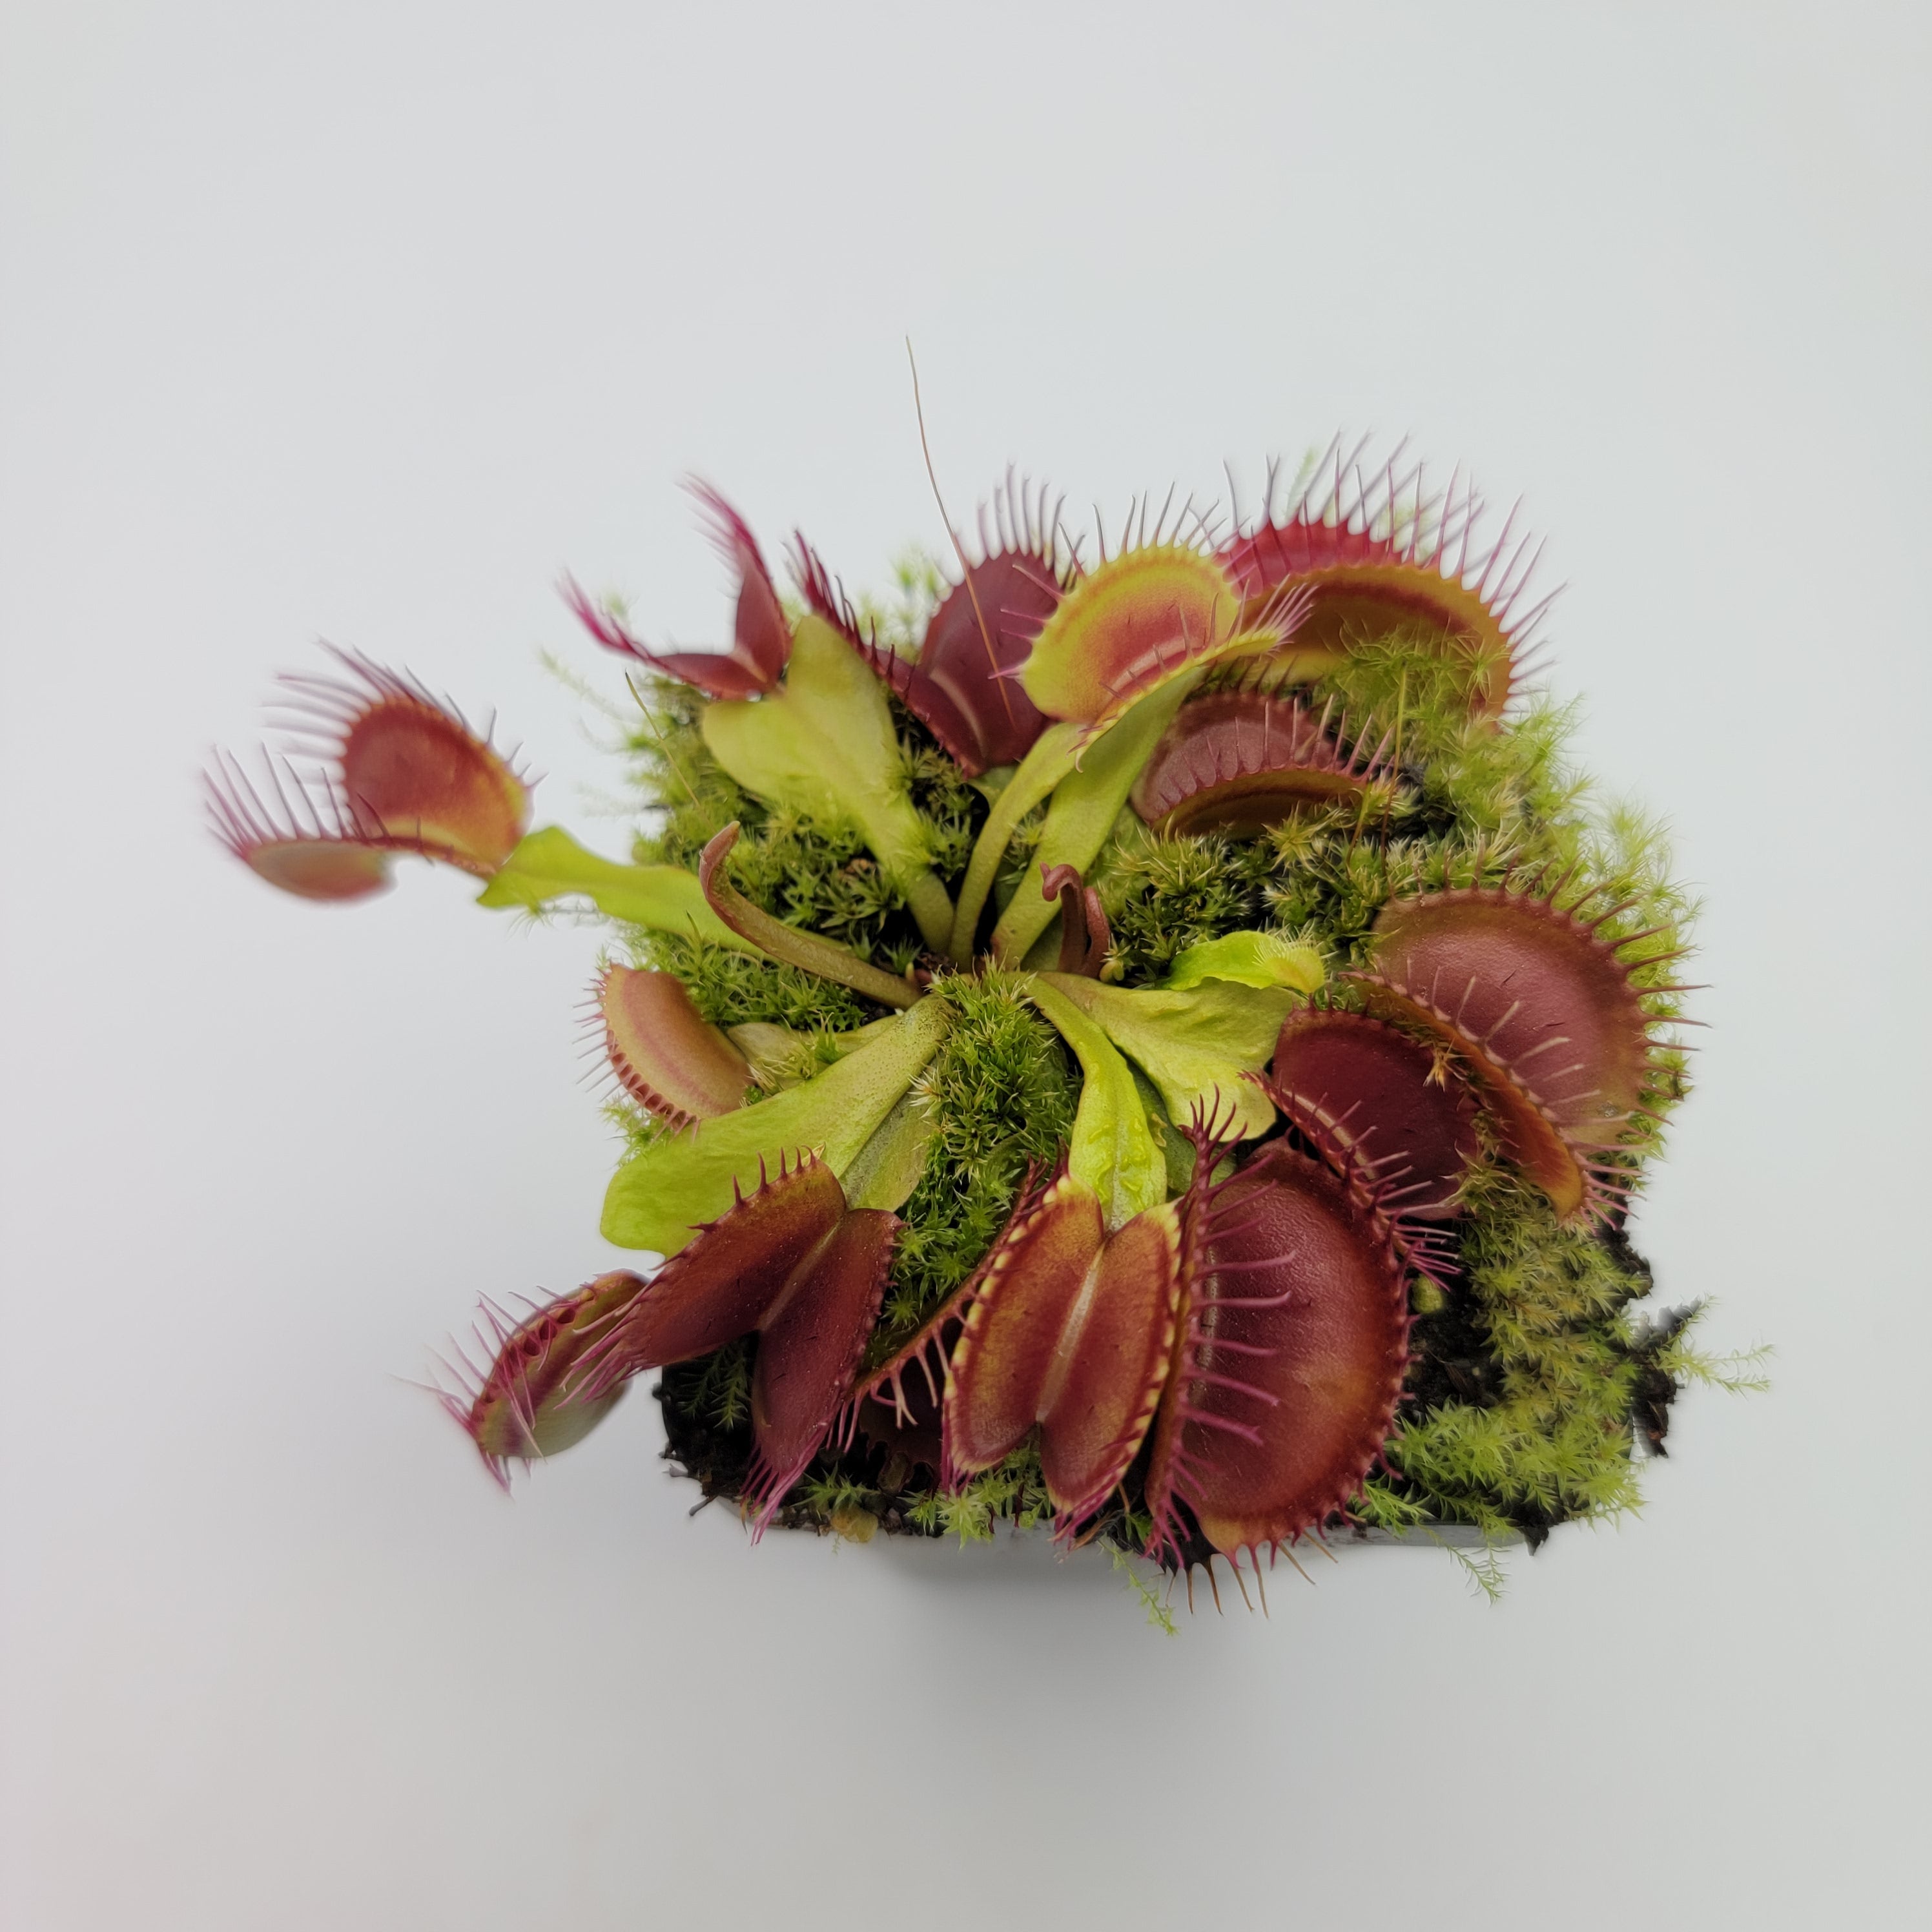 Venus flytrap (Dionaea muscipula) 'Schuppenstiel II' x 'Schuppenstiel II' - Rainbow Carnivorous Plants LLC